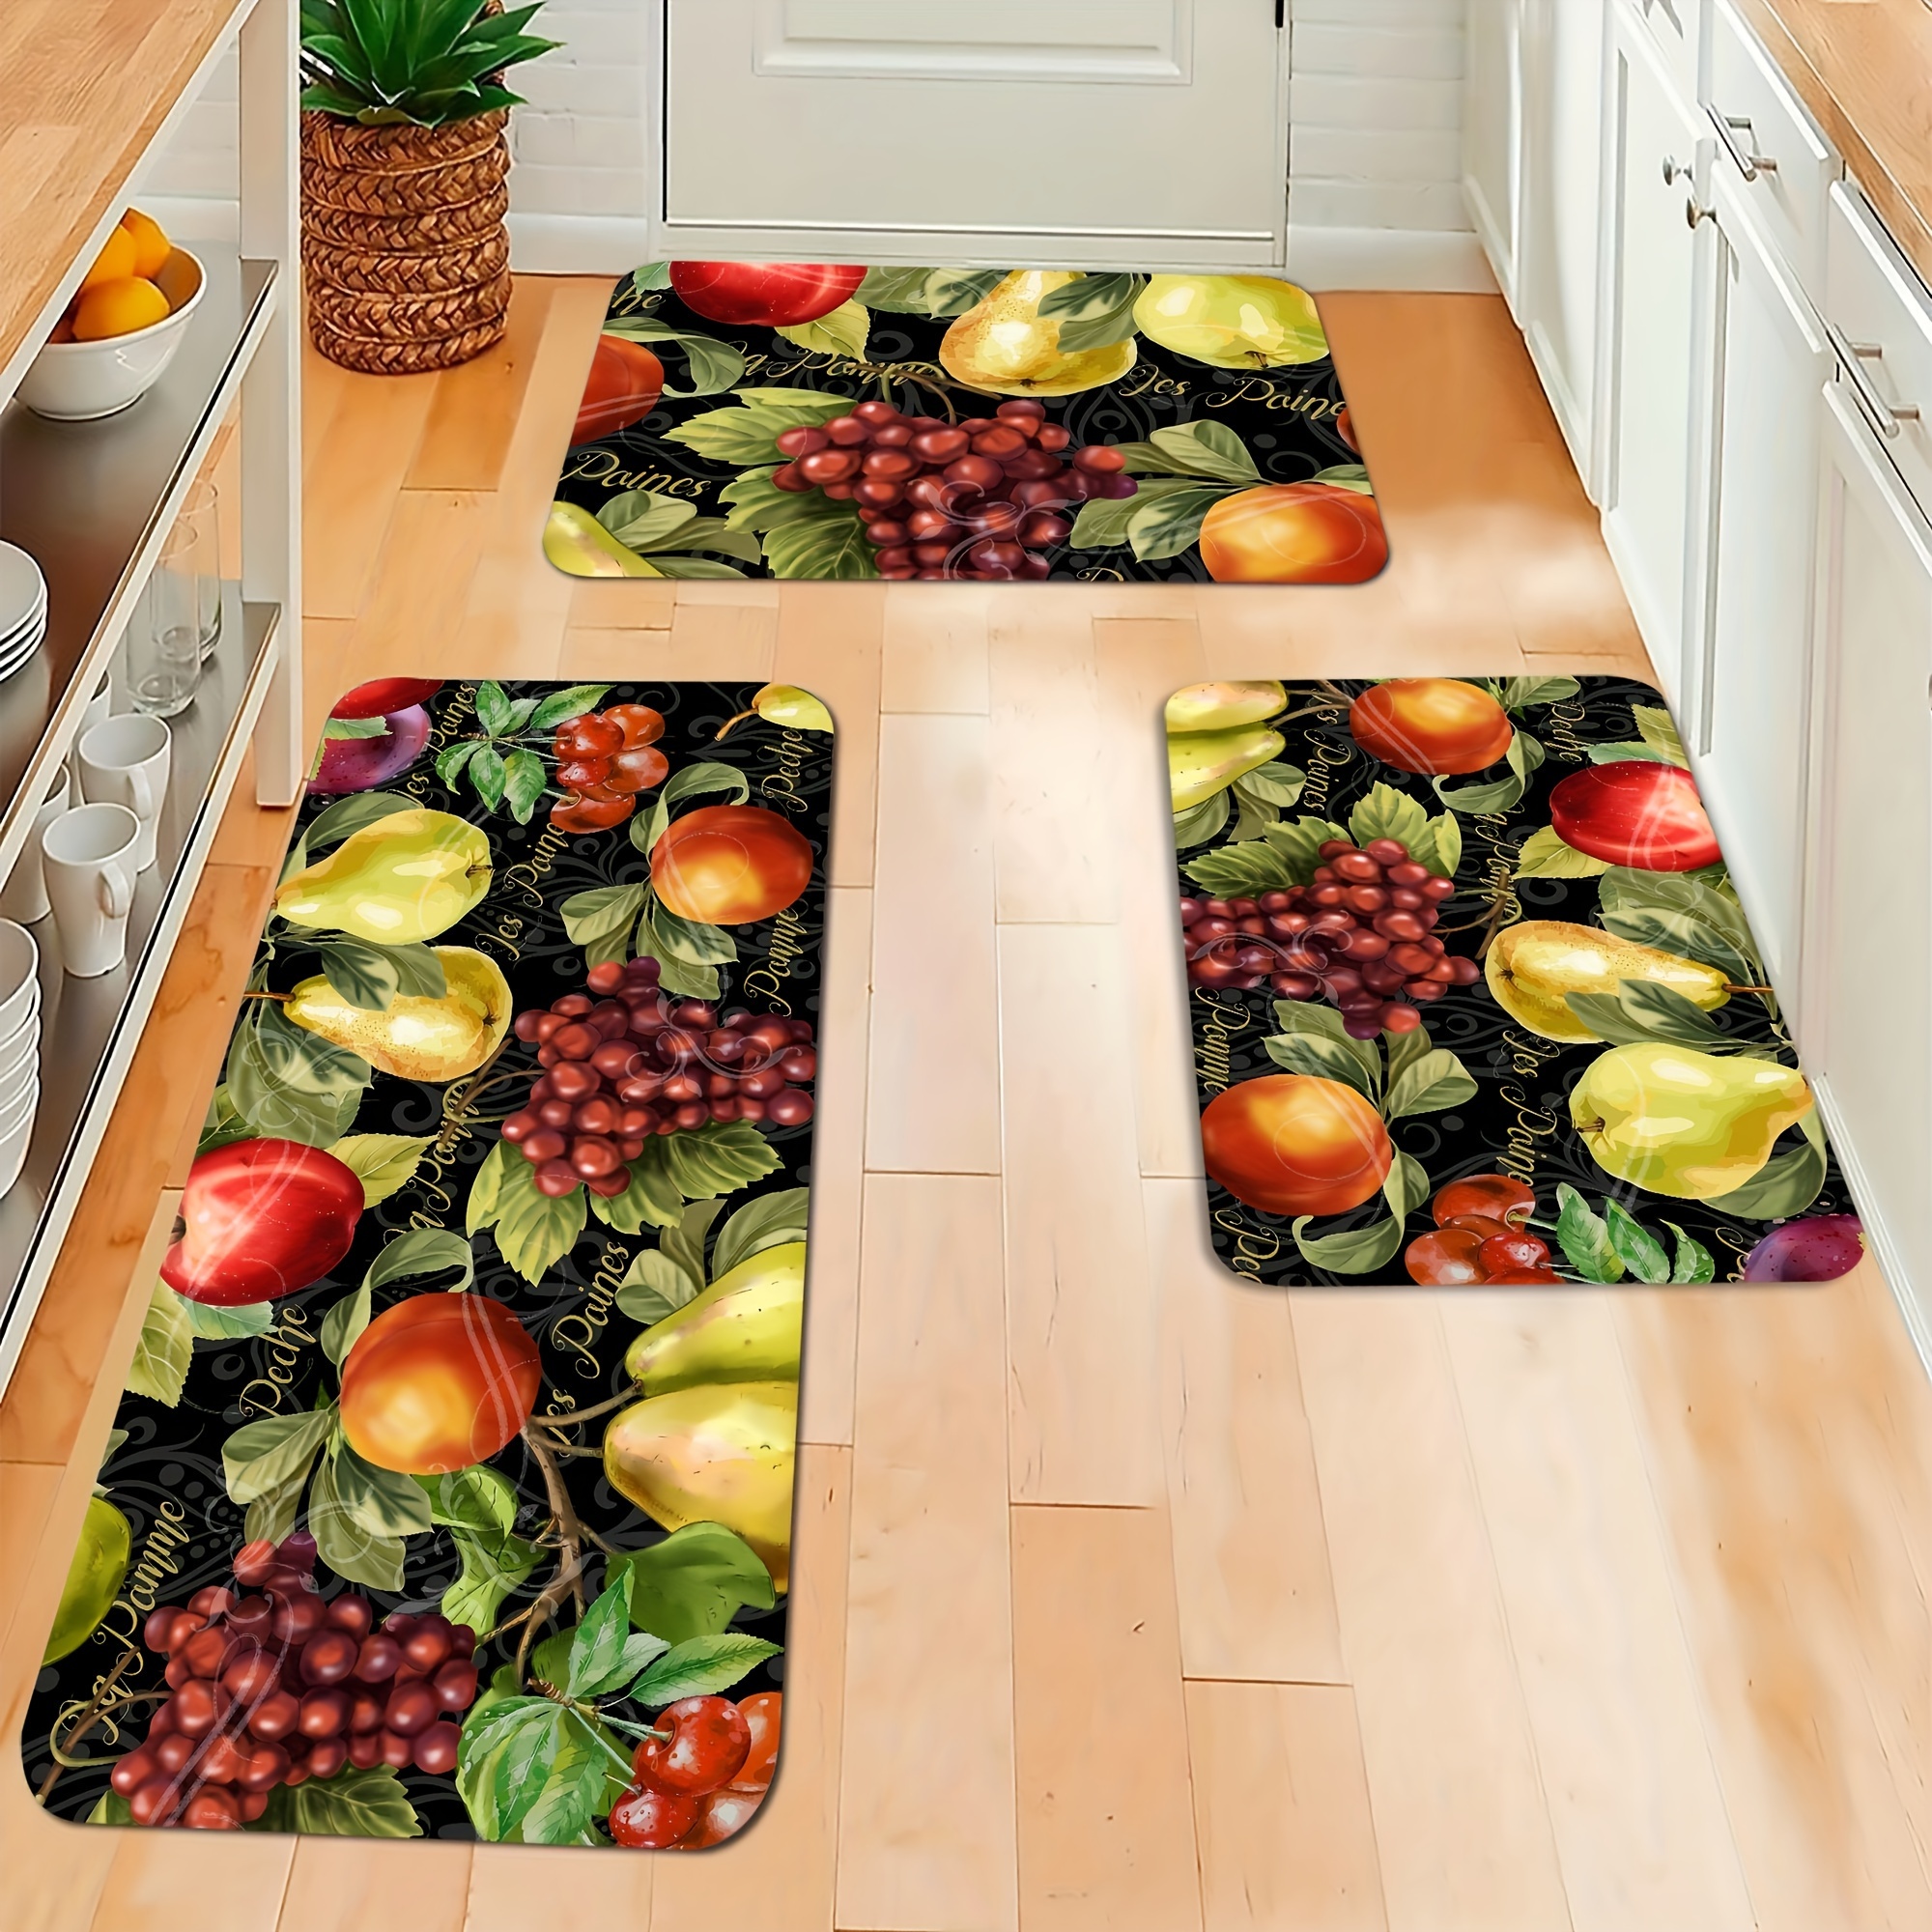 

3-piece Kitchen Doormat Set - Non-slip, Absorbent, Machine Washable Rectangle Area Rugs - Polyester Flannel, Fruit Design - Includes Sizes 40x60cm, 50x80cm, 40x120cm